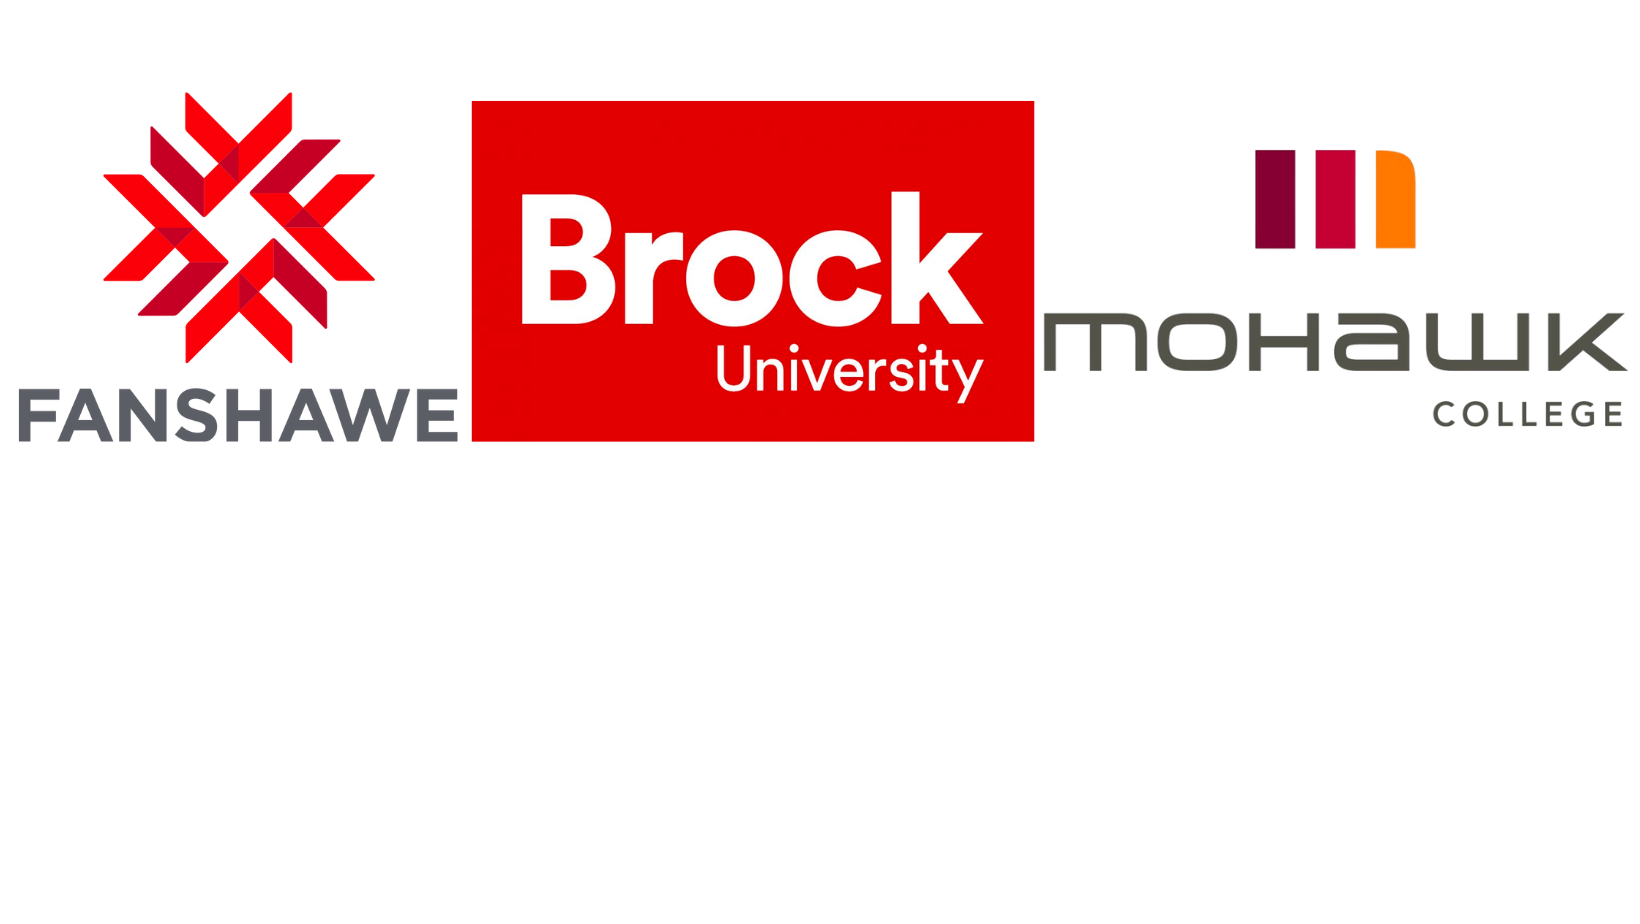 Fanshaw logo, Brock University logo and Mohawk college logo - CPCF's Collaborative Programs 